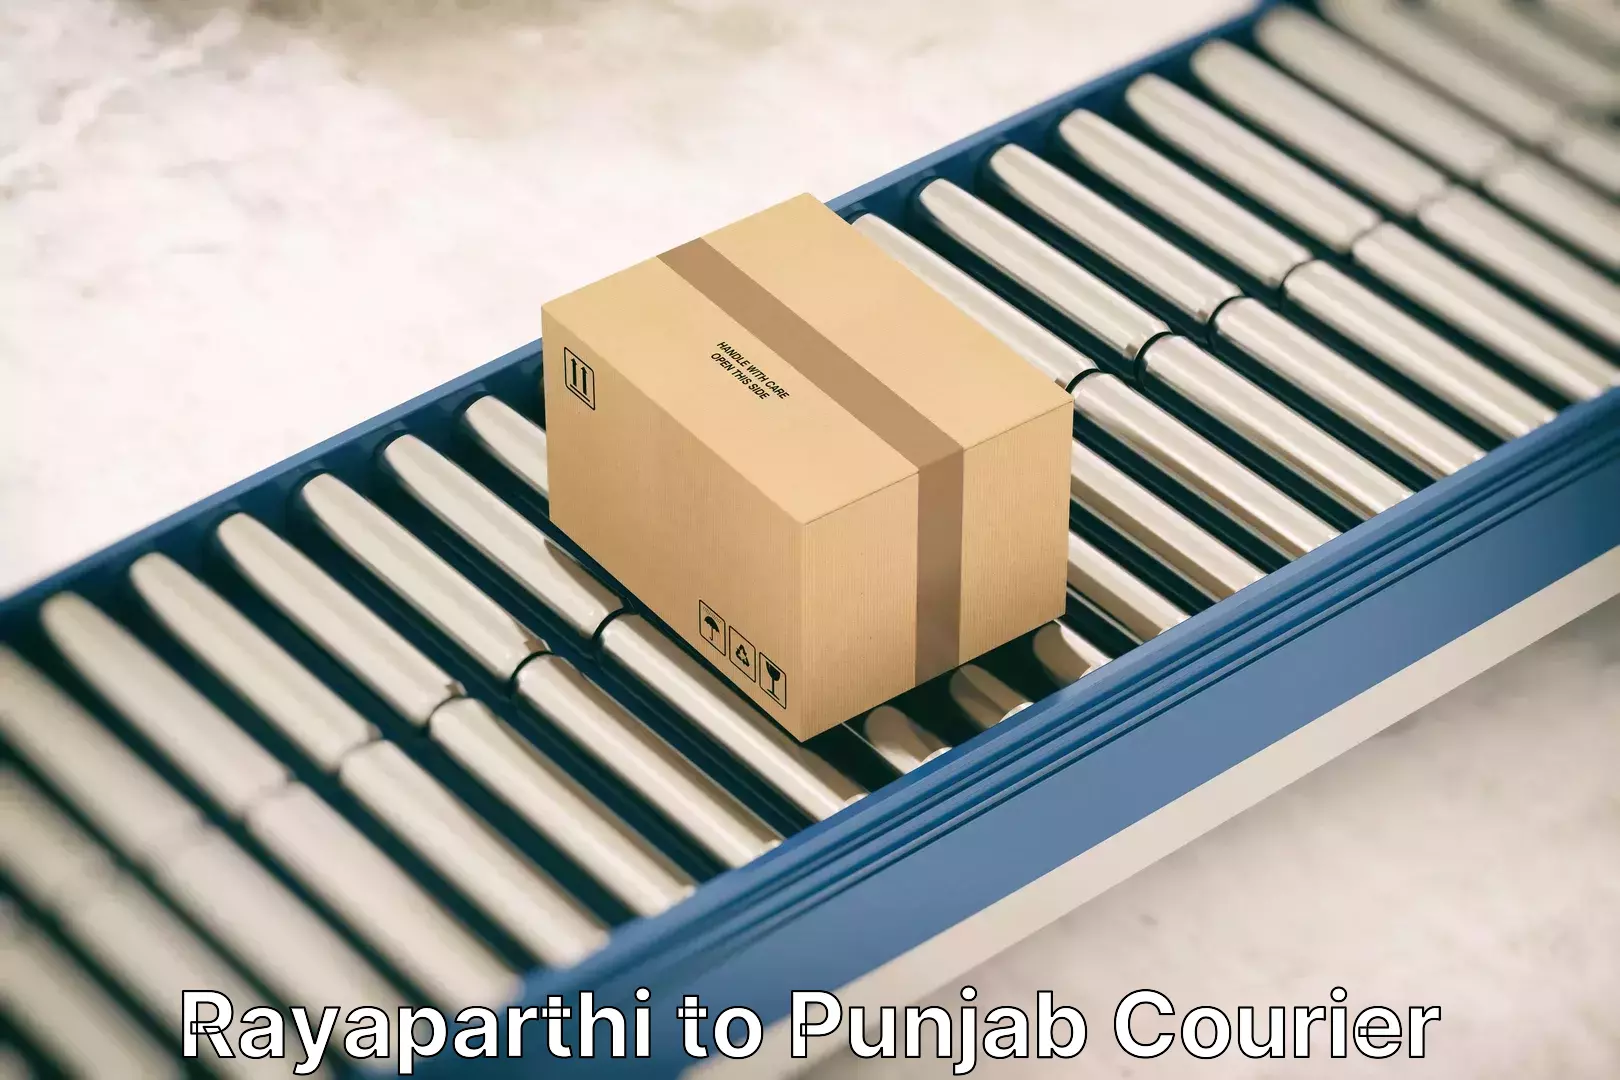 Home shifting experts Rayaparthi to Punjab